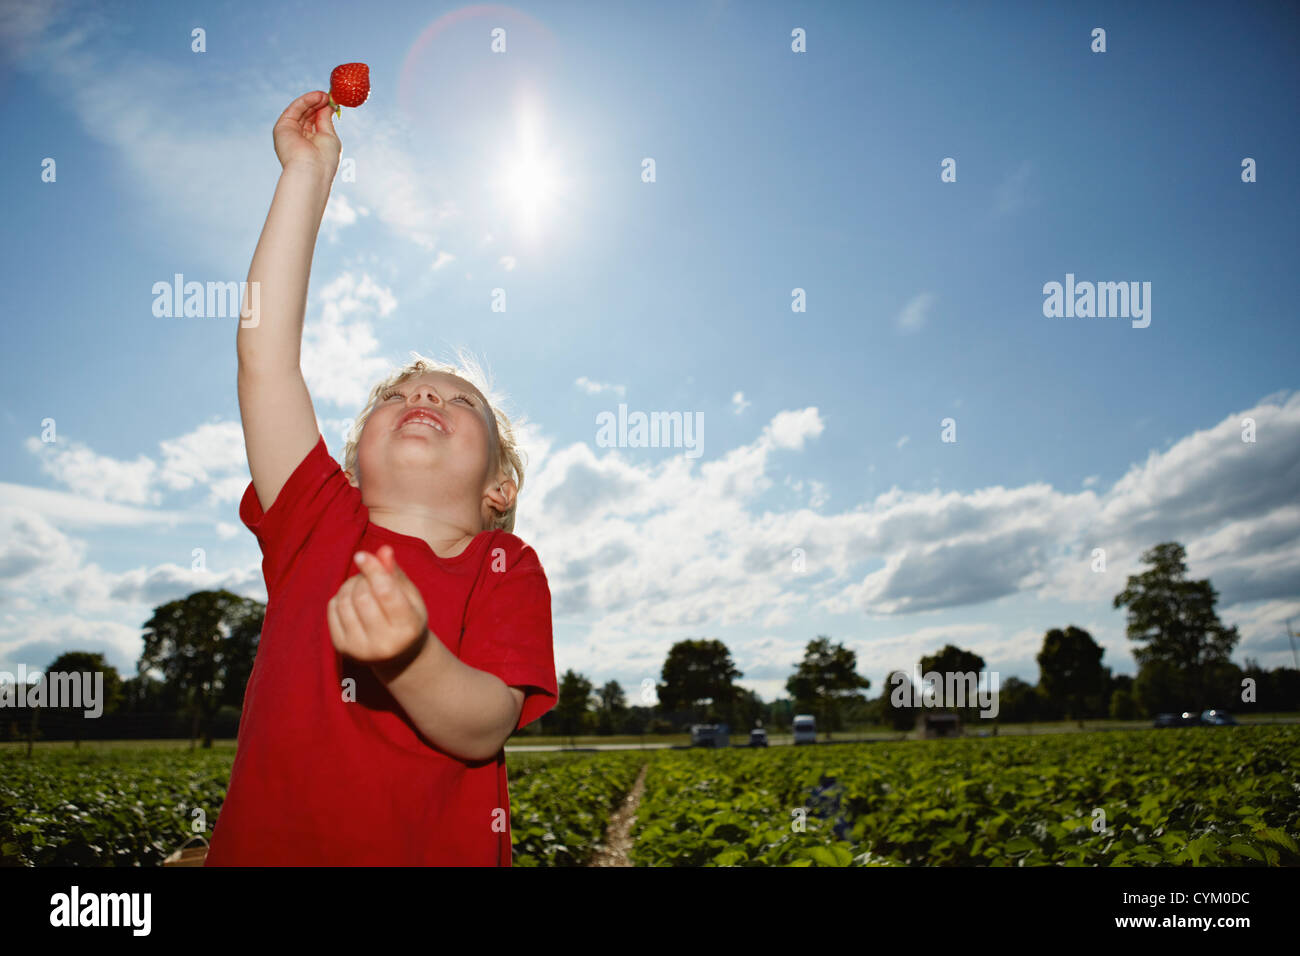 Junge halten Erdbeer im Feld Stockfoto